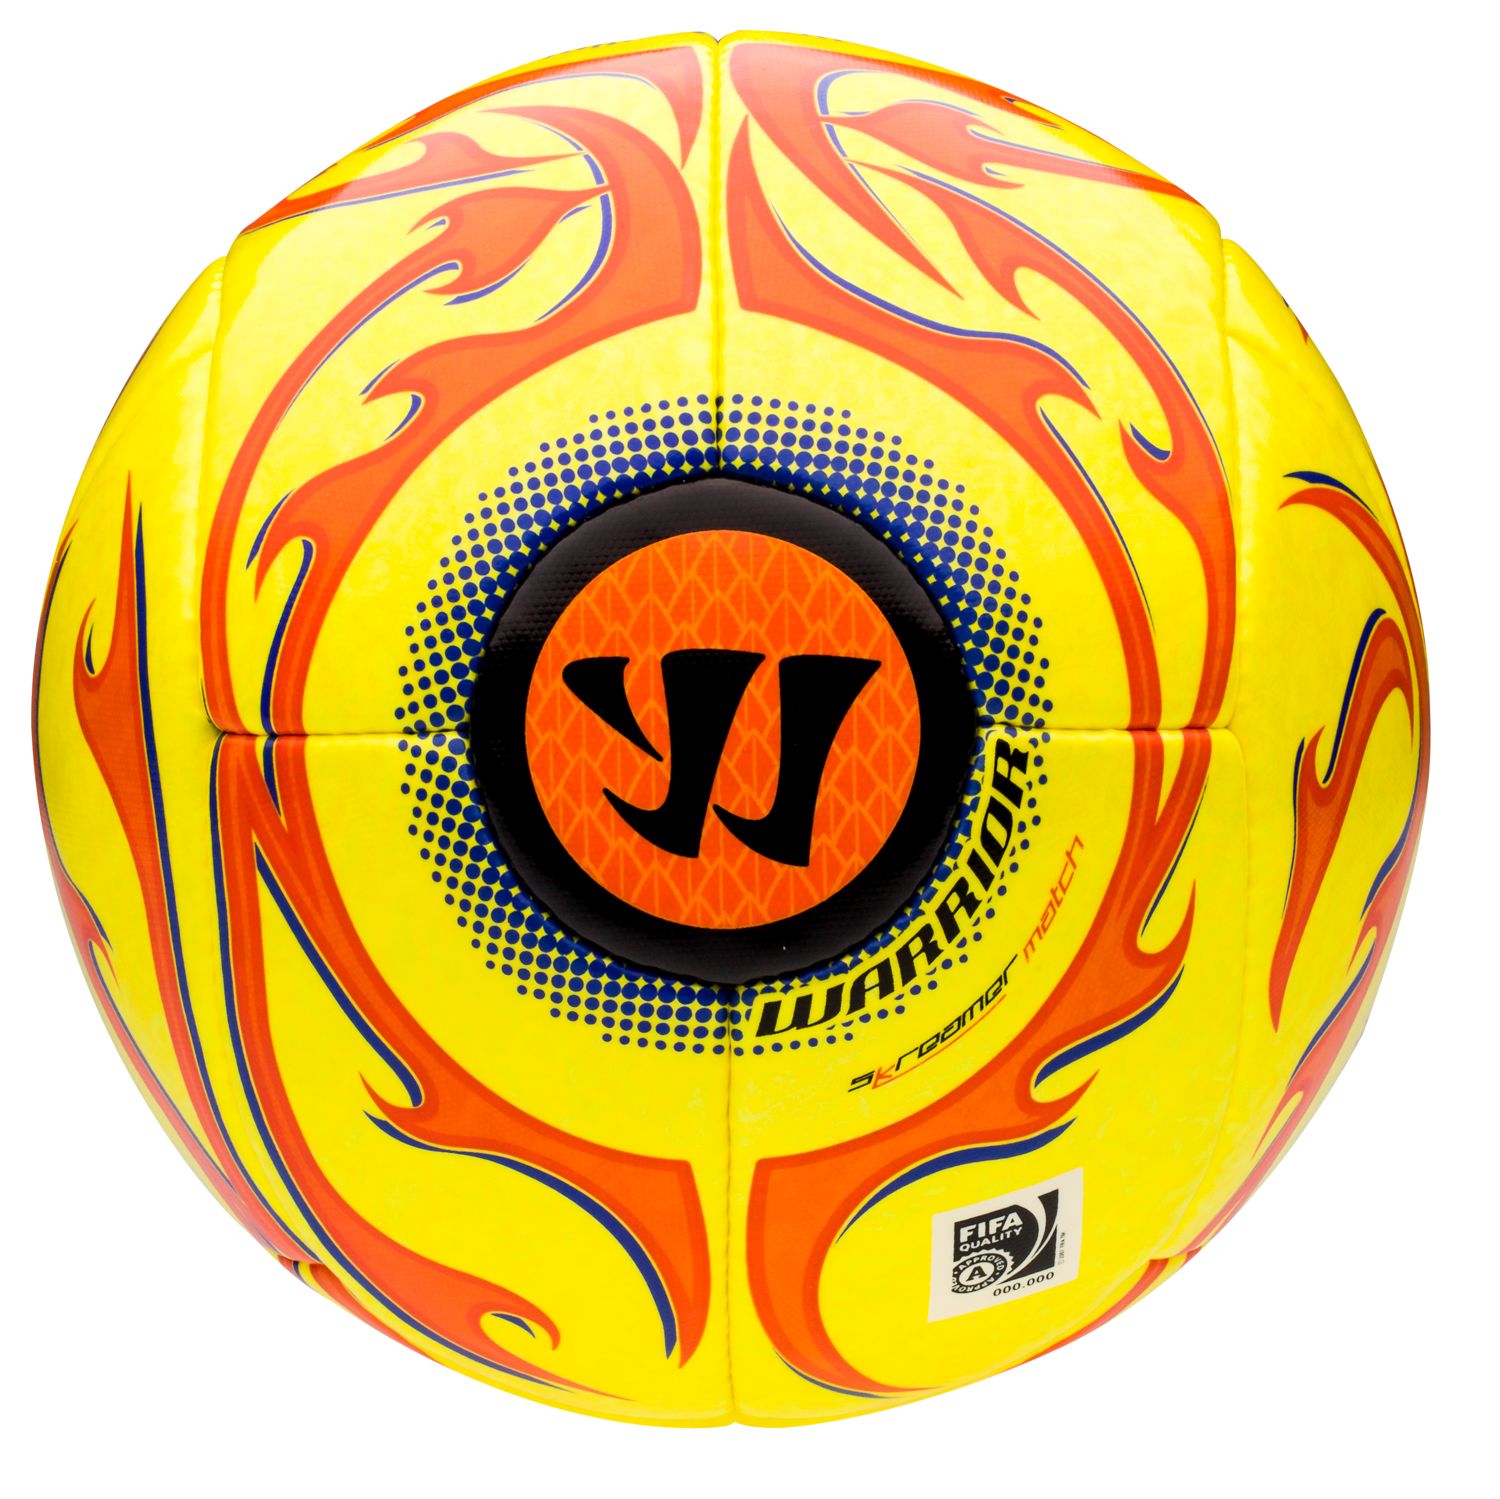 Skreamer Match HI VIS Ball, Fluorescent Yellow image number 0